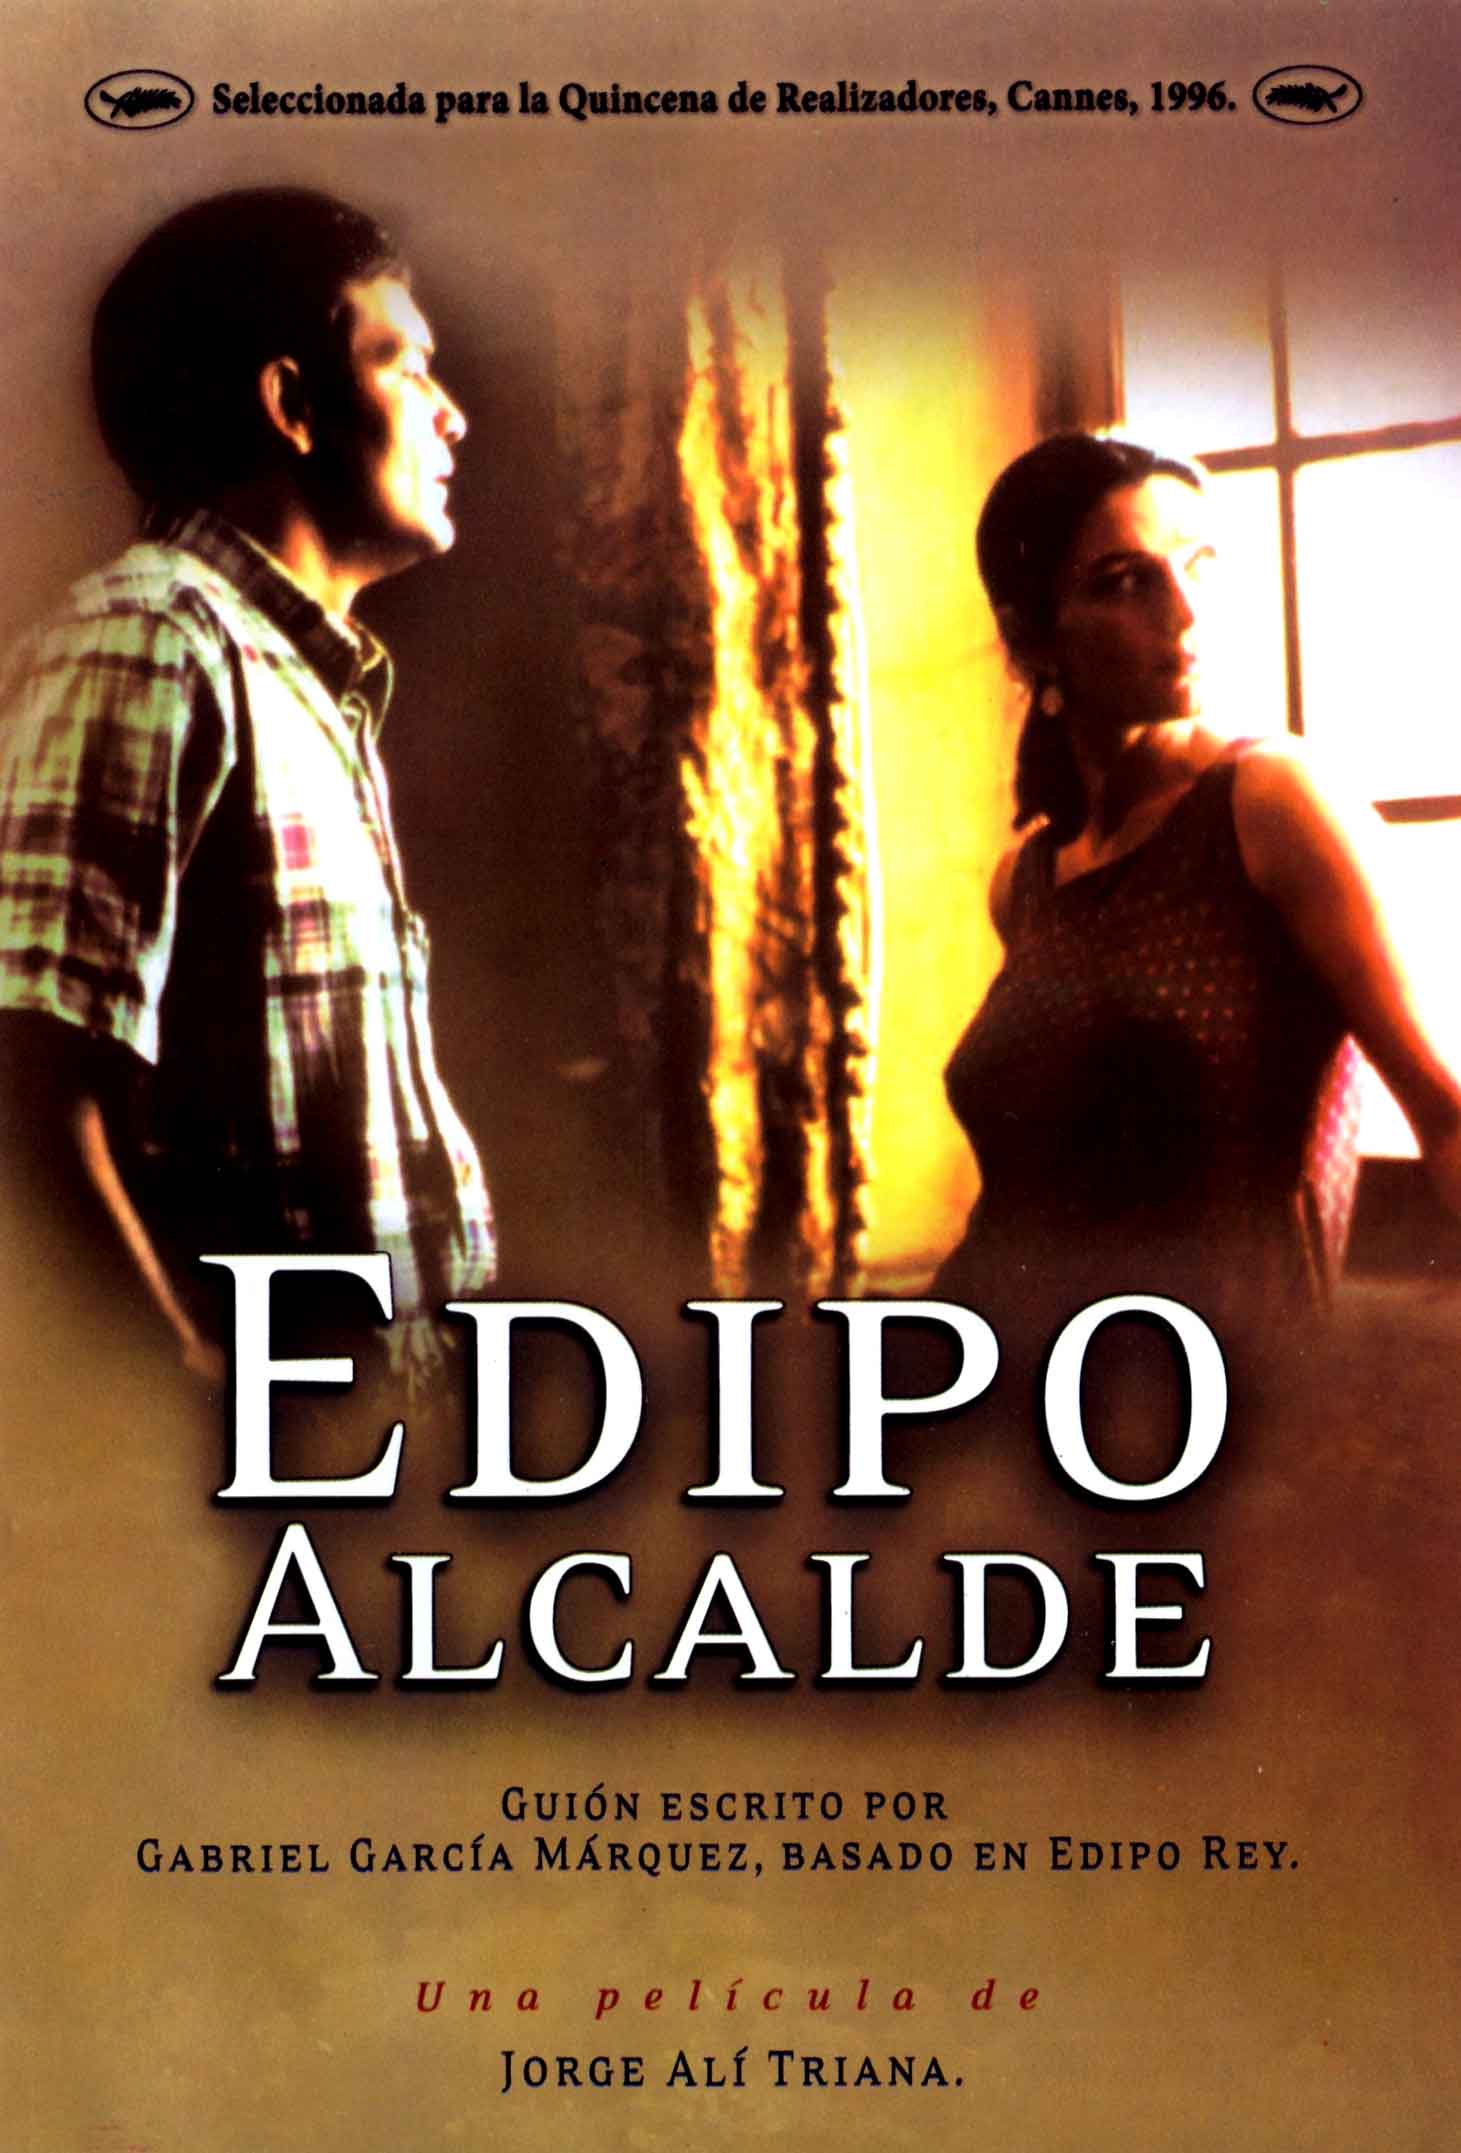 Oedipo alcalde (1996) Screenshot 2